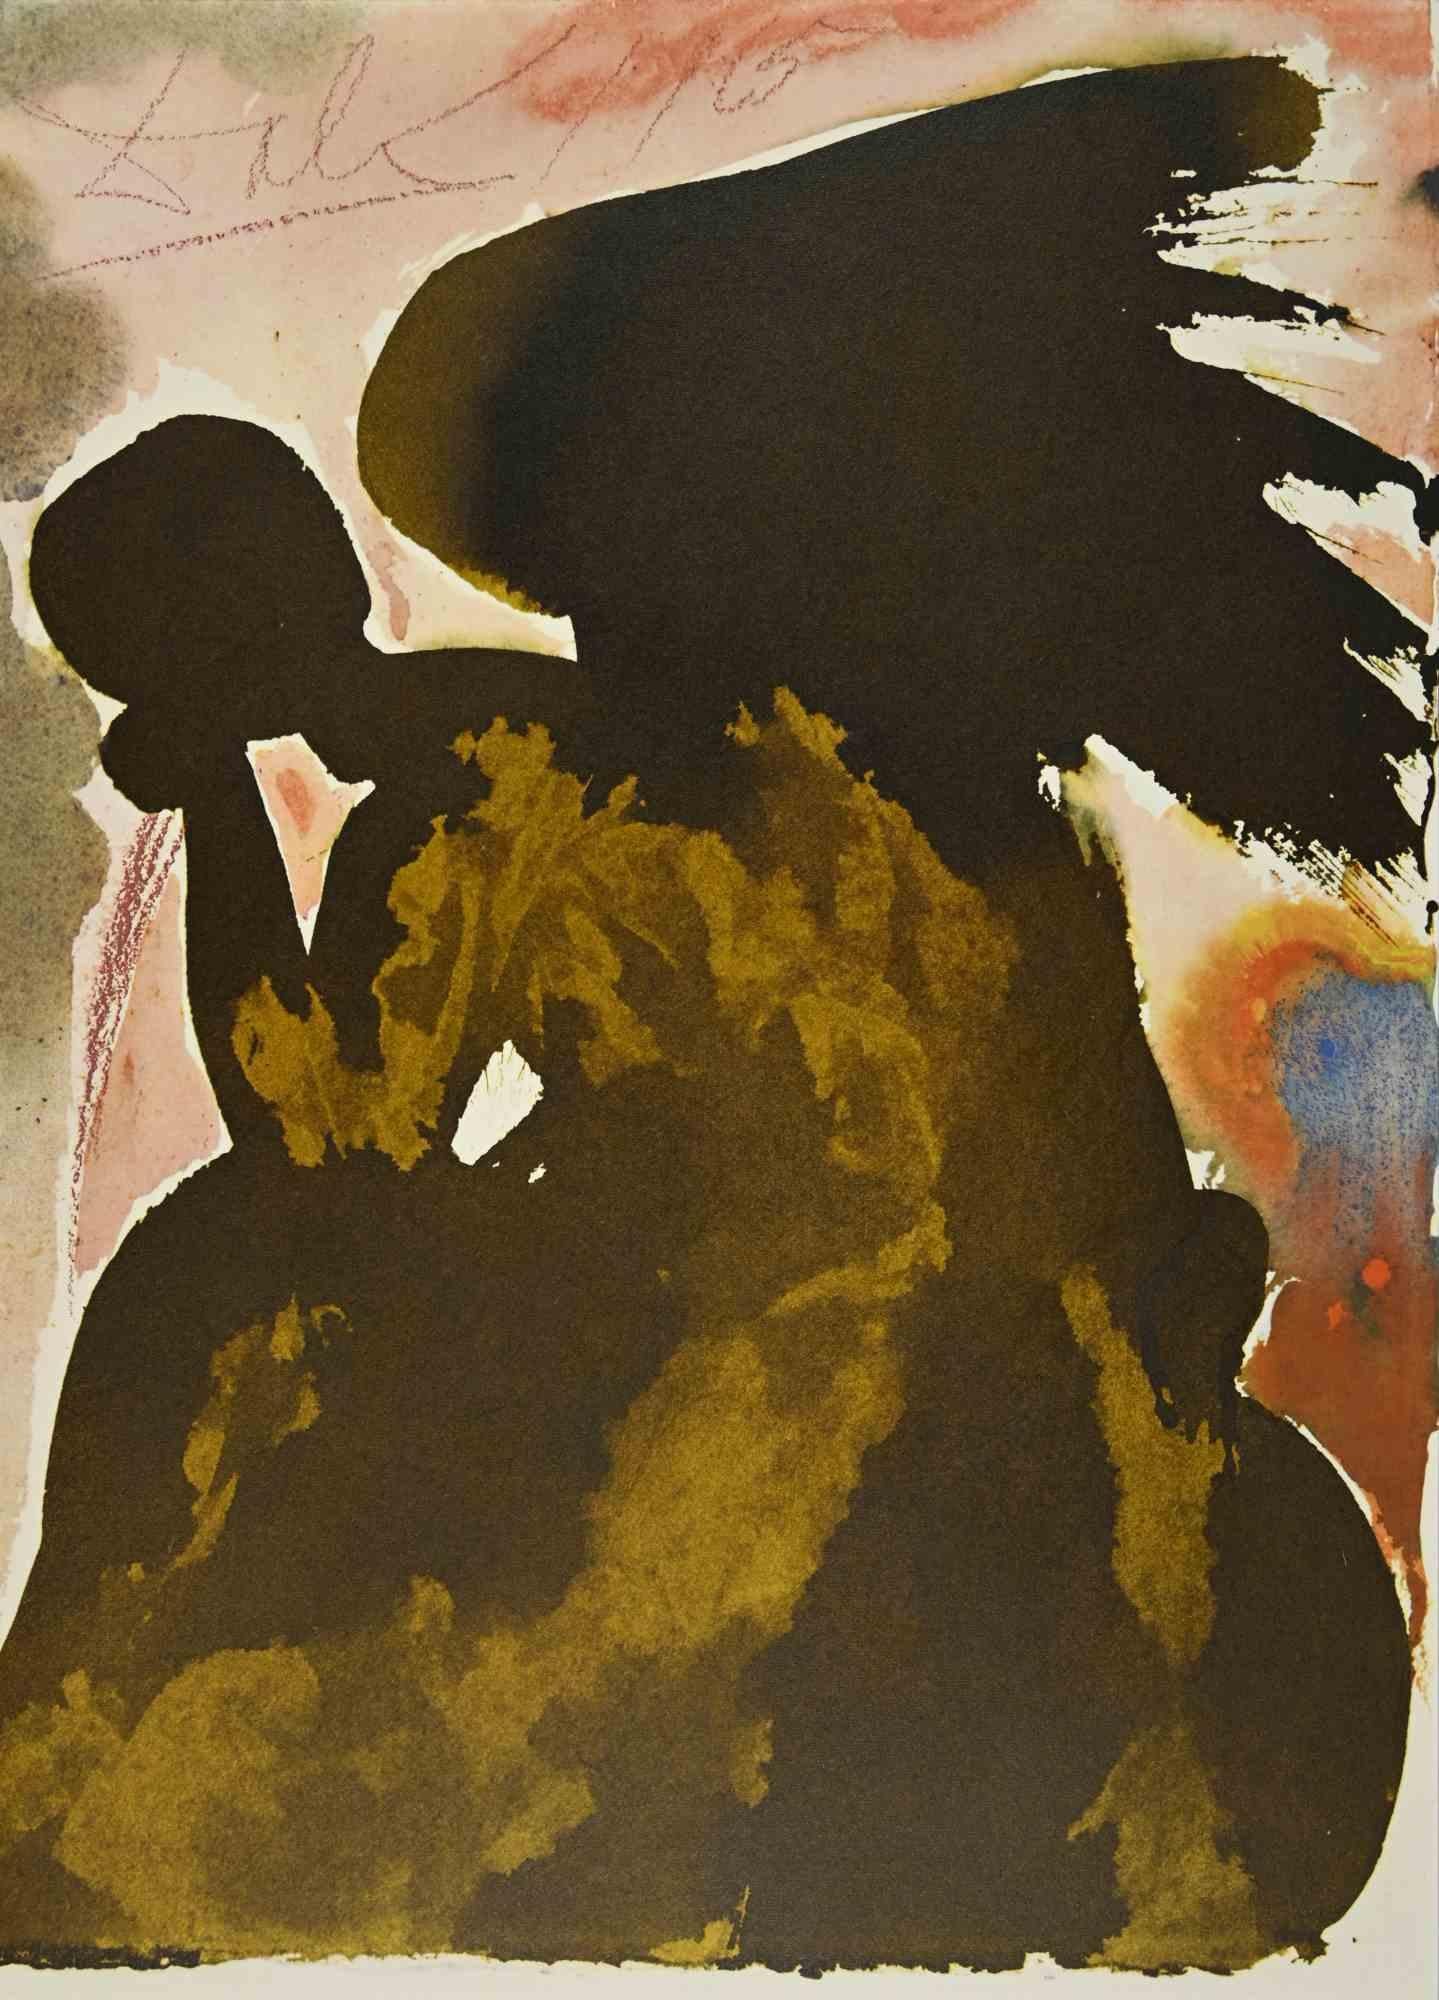 Salvador Dalí Print - Inter Filios Dei Affuit Etiam Satan - Lithograph - 1964